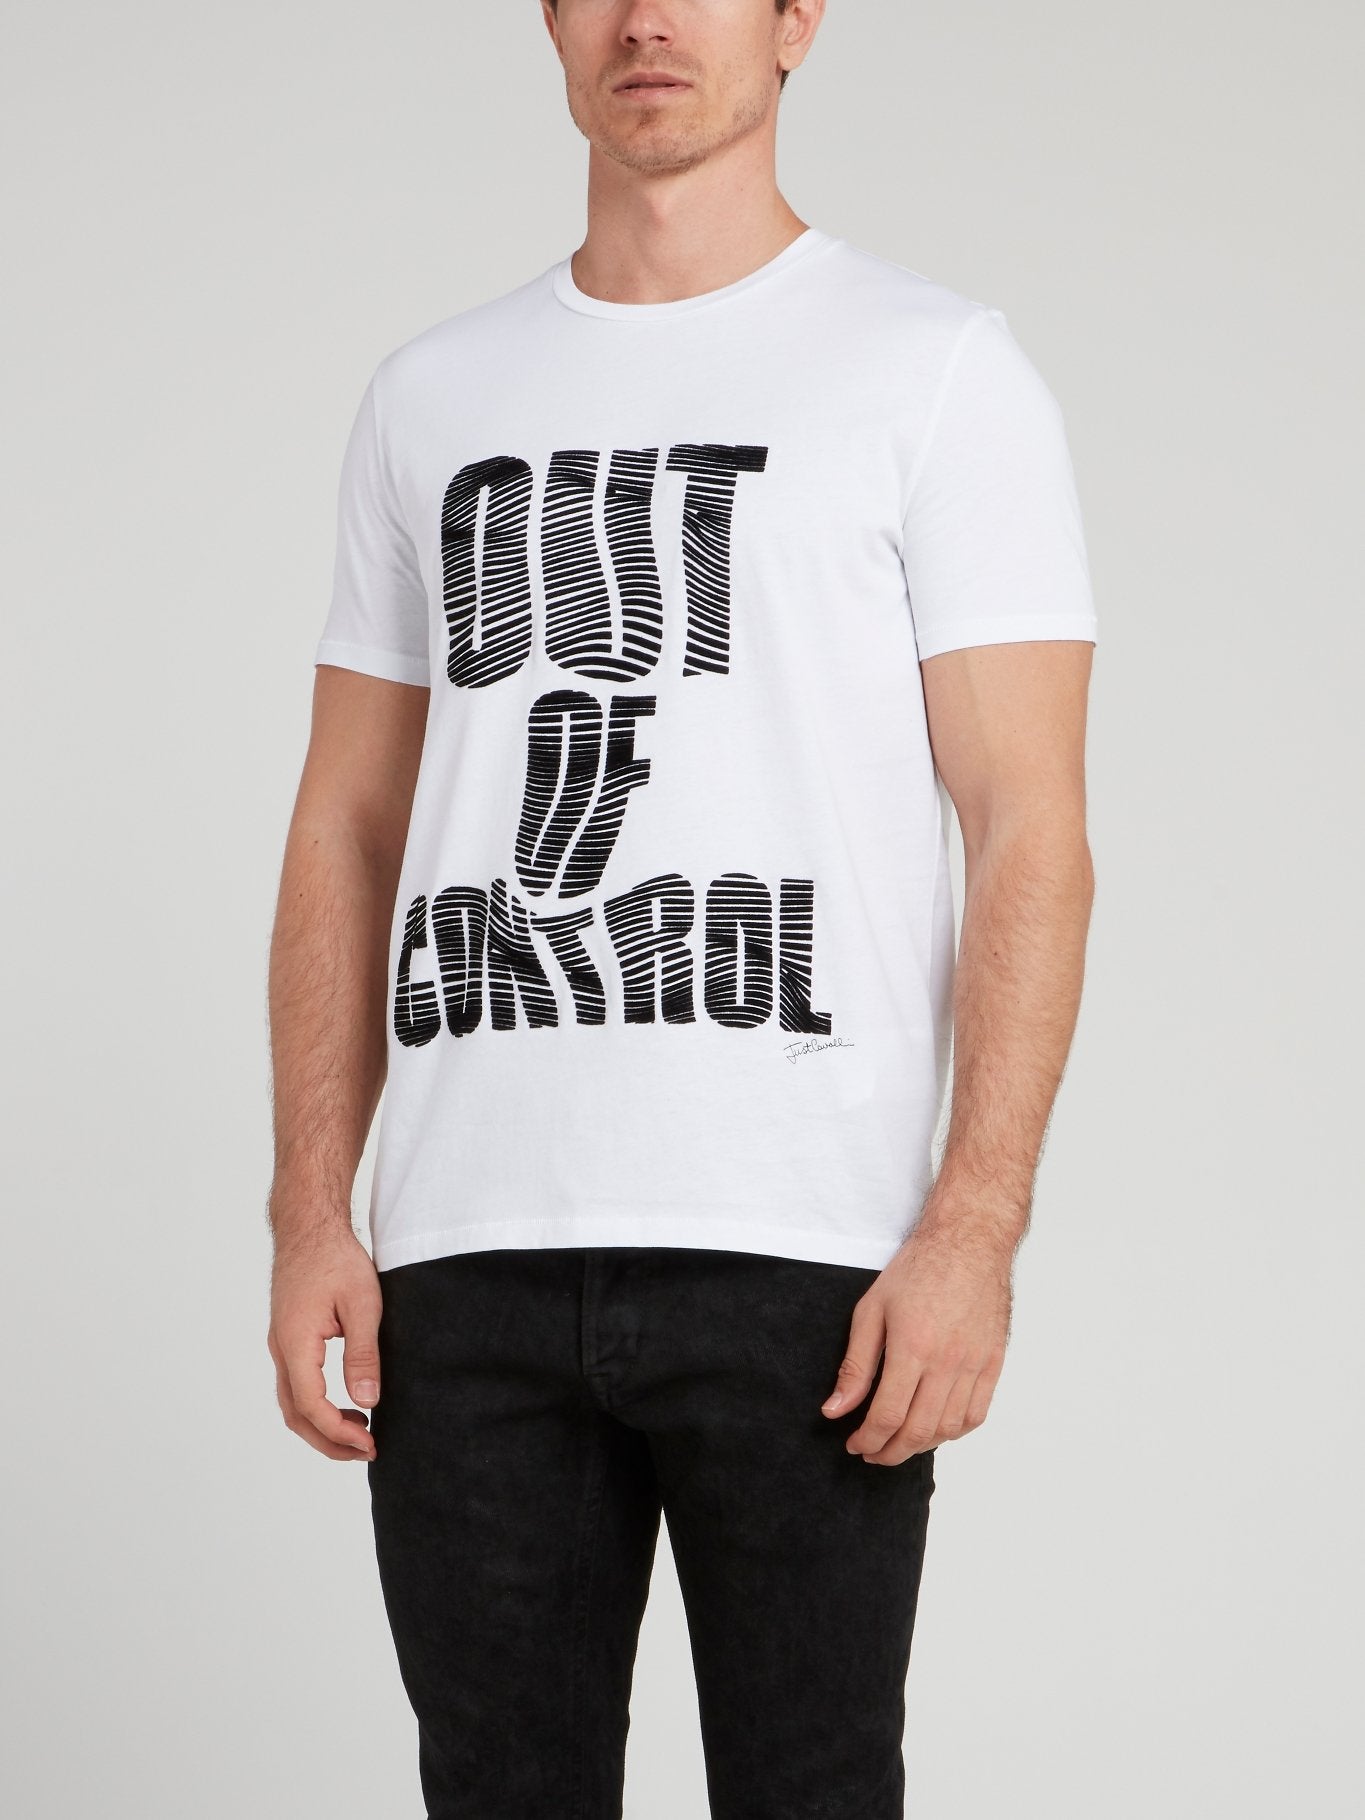 White Distorted Statement Print T-Shirt